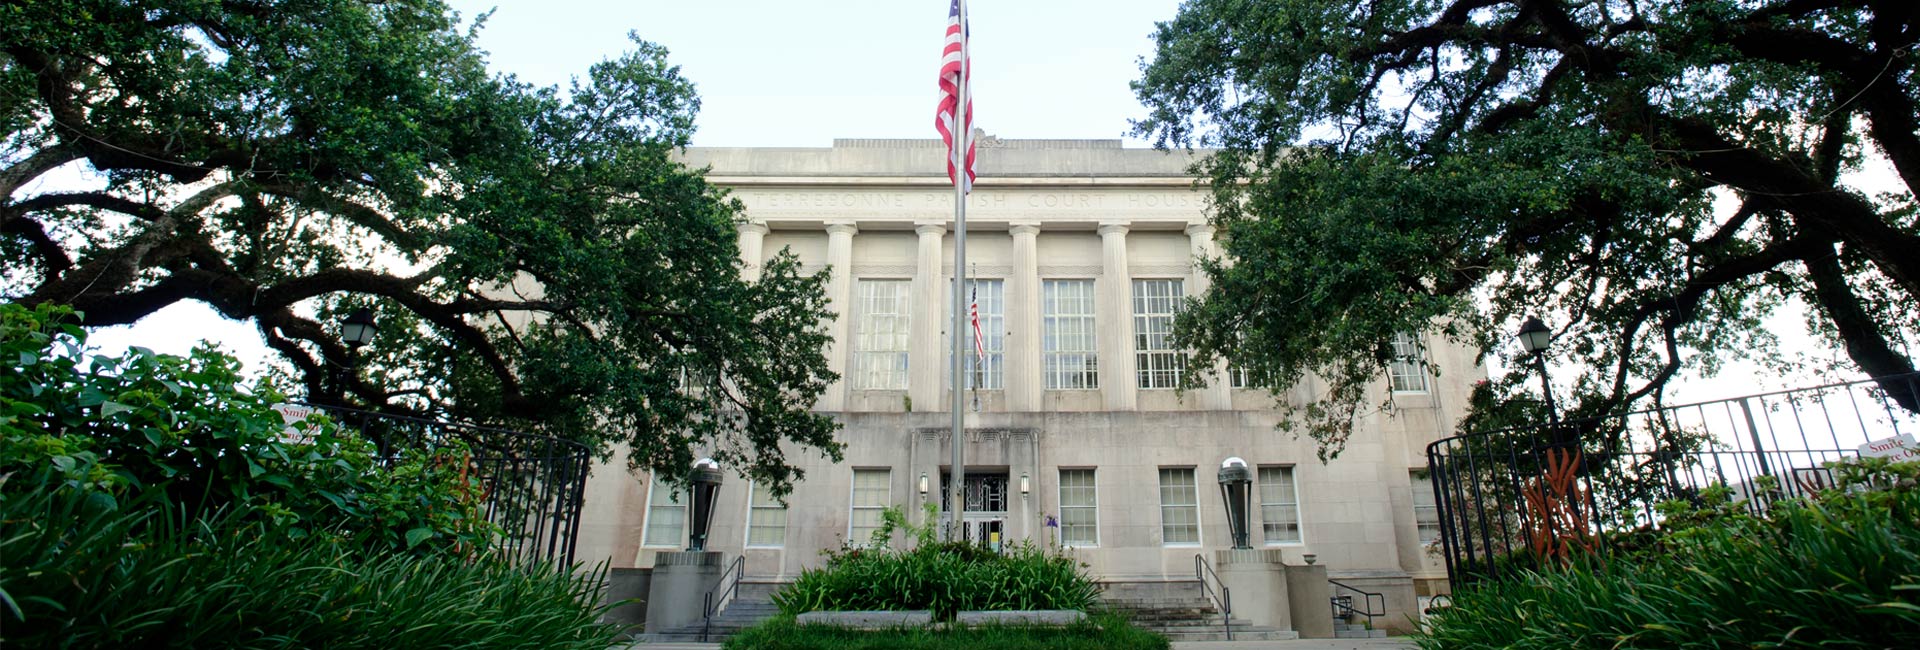 Courthouse Entrance